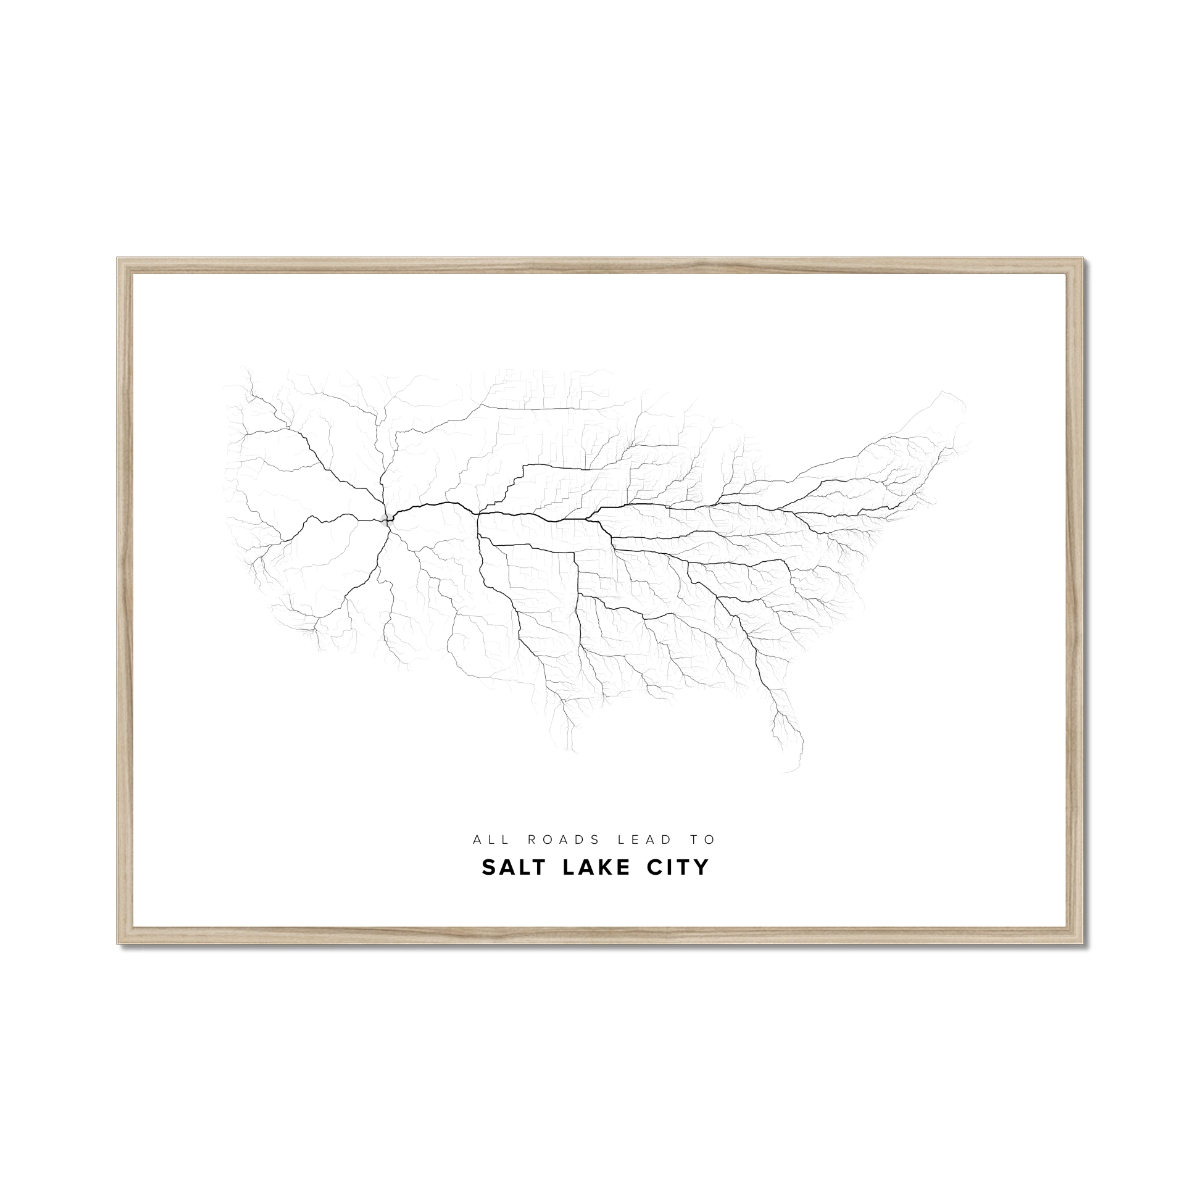 All roads lead to Salt Lake City (United States of America) Fine Art Map Print